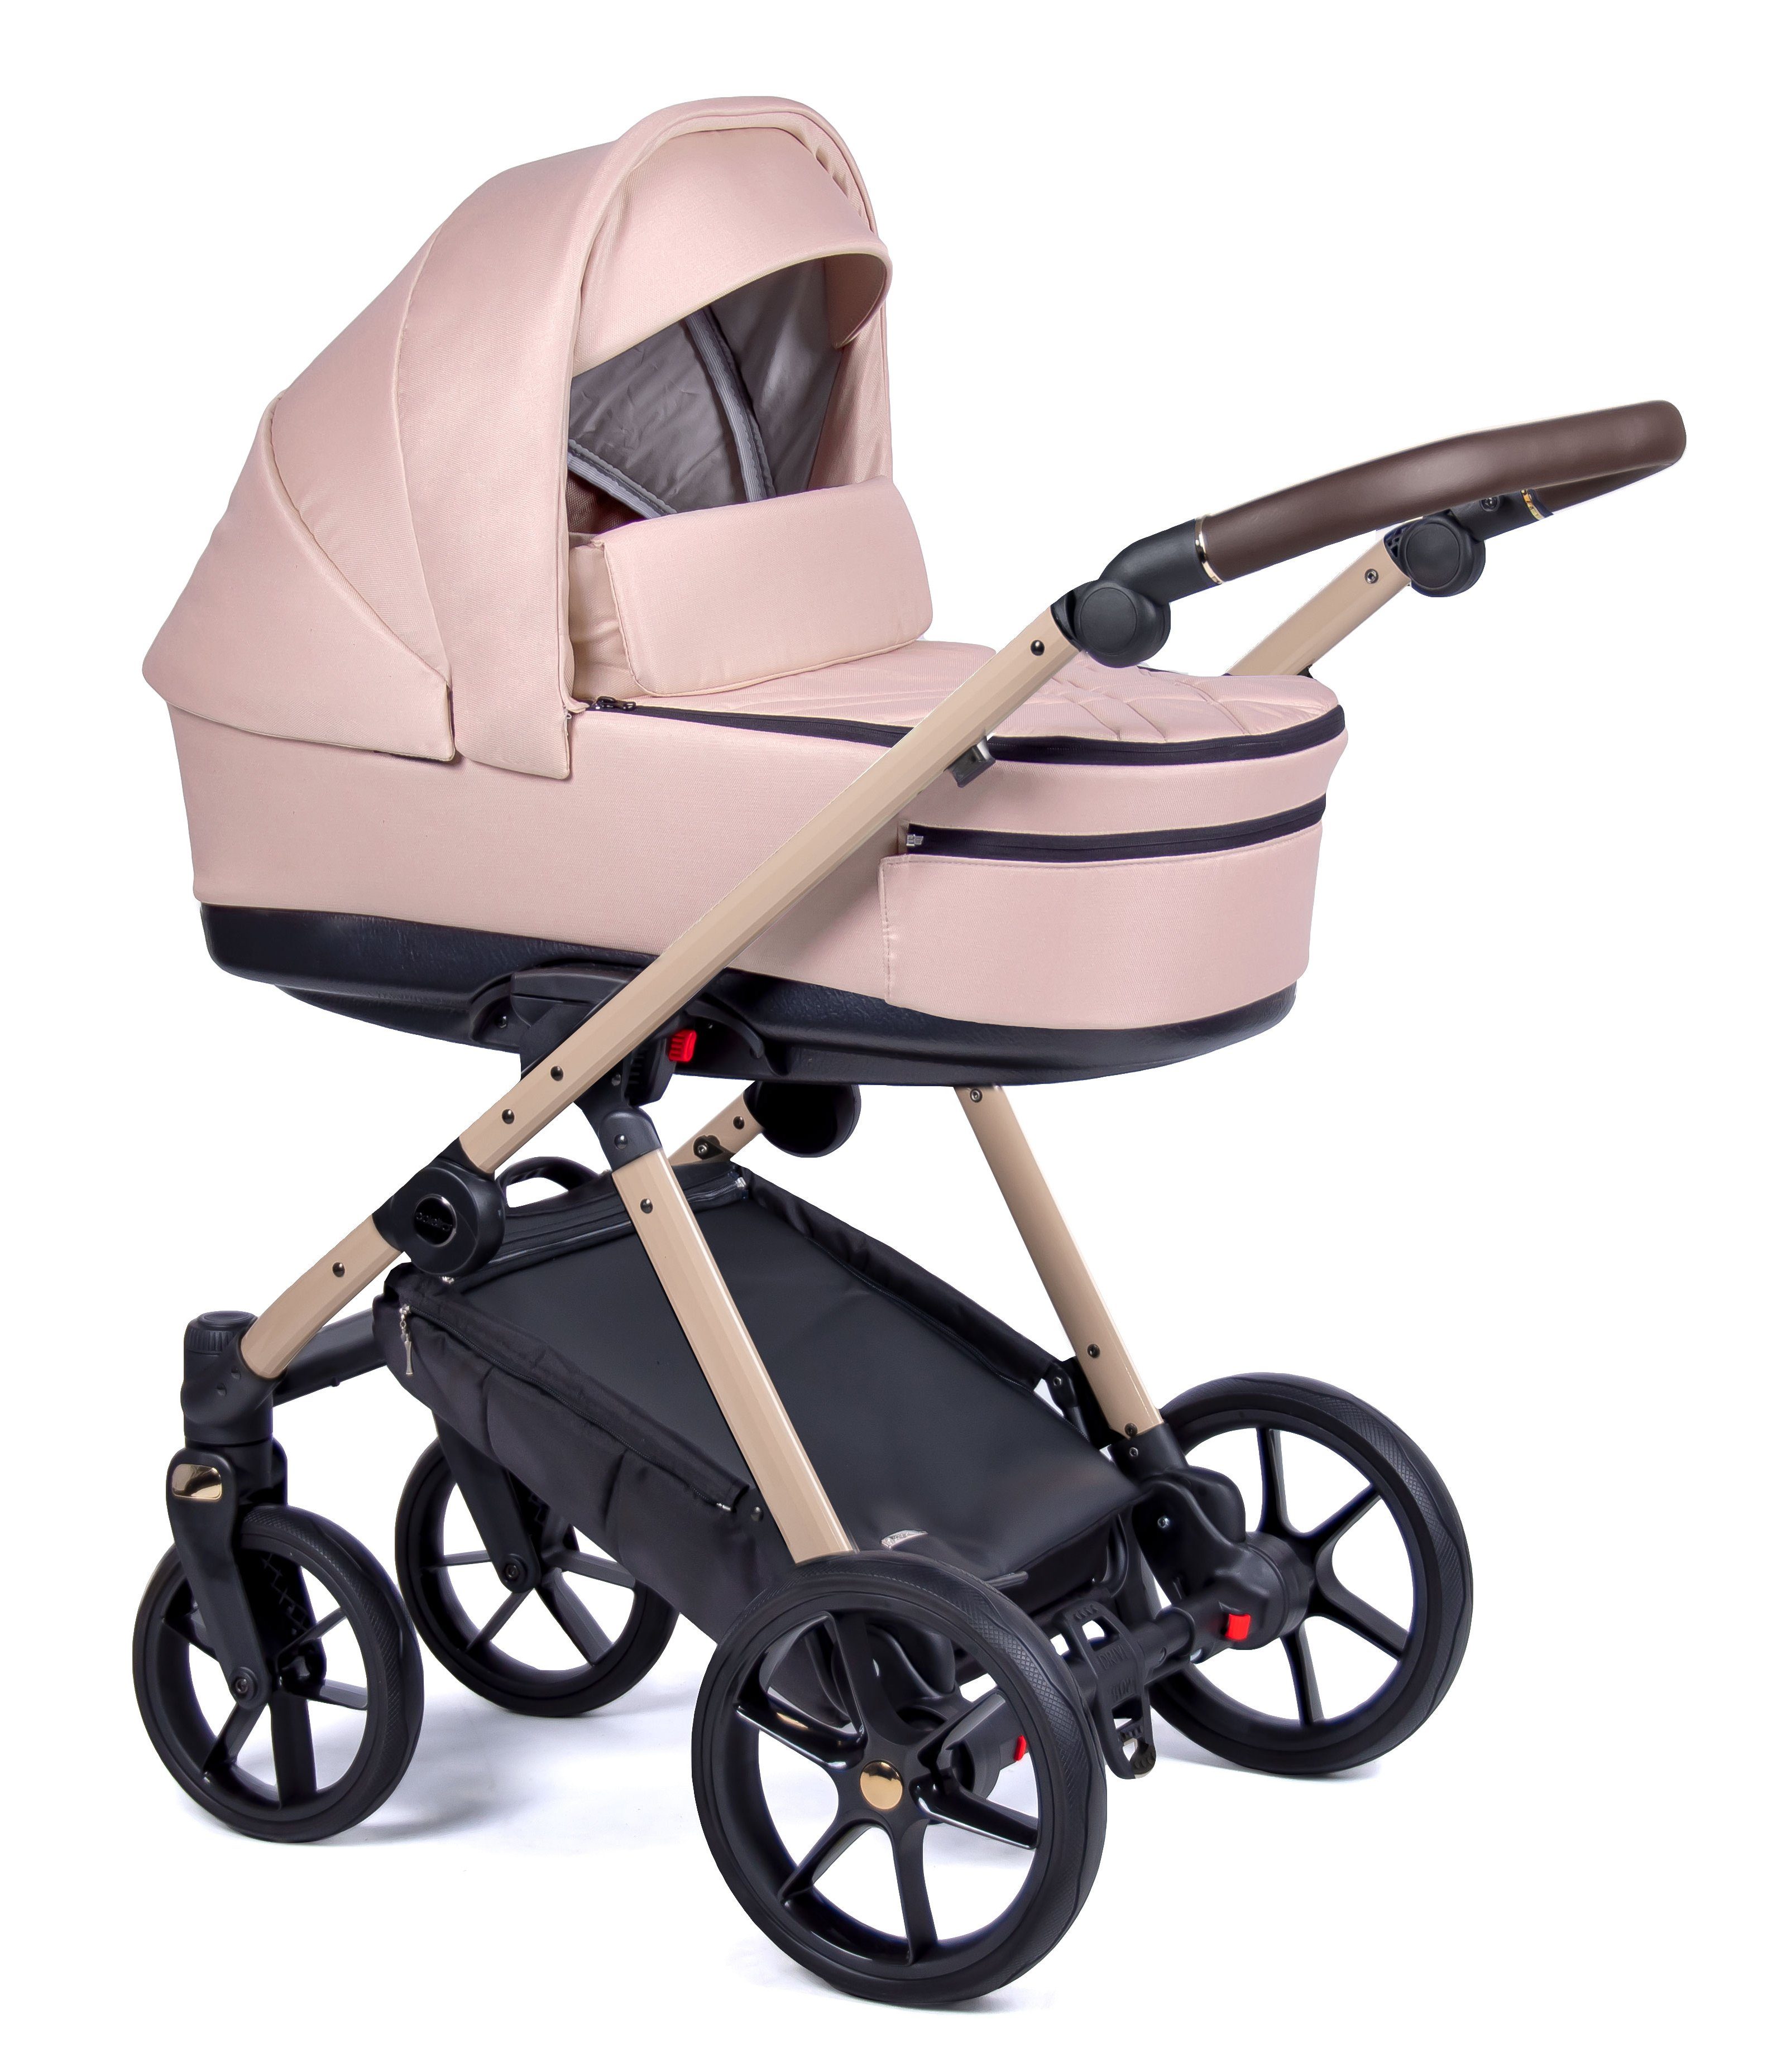 Designs 1 in in Kinderwagen-Set beige - Kombi-Kinderwagen Gestell 3 Teile Creme = Axxis - babies-on-wheels 24 15